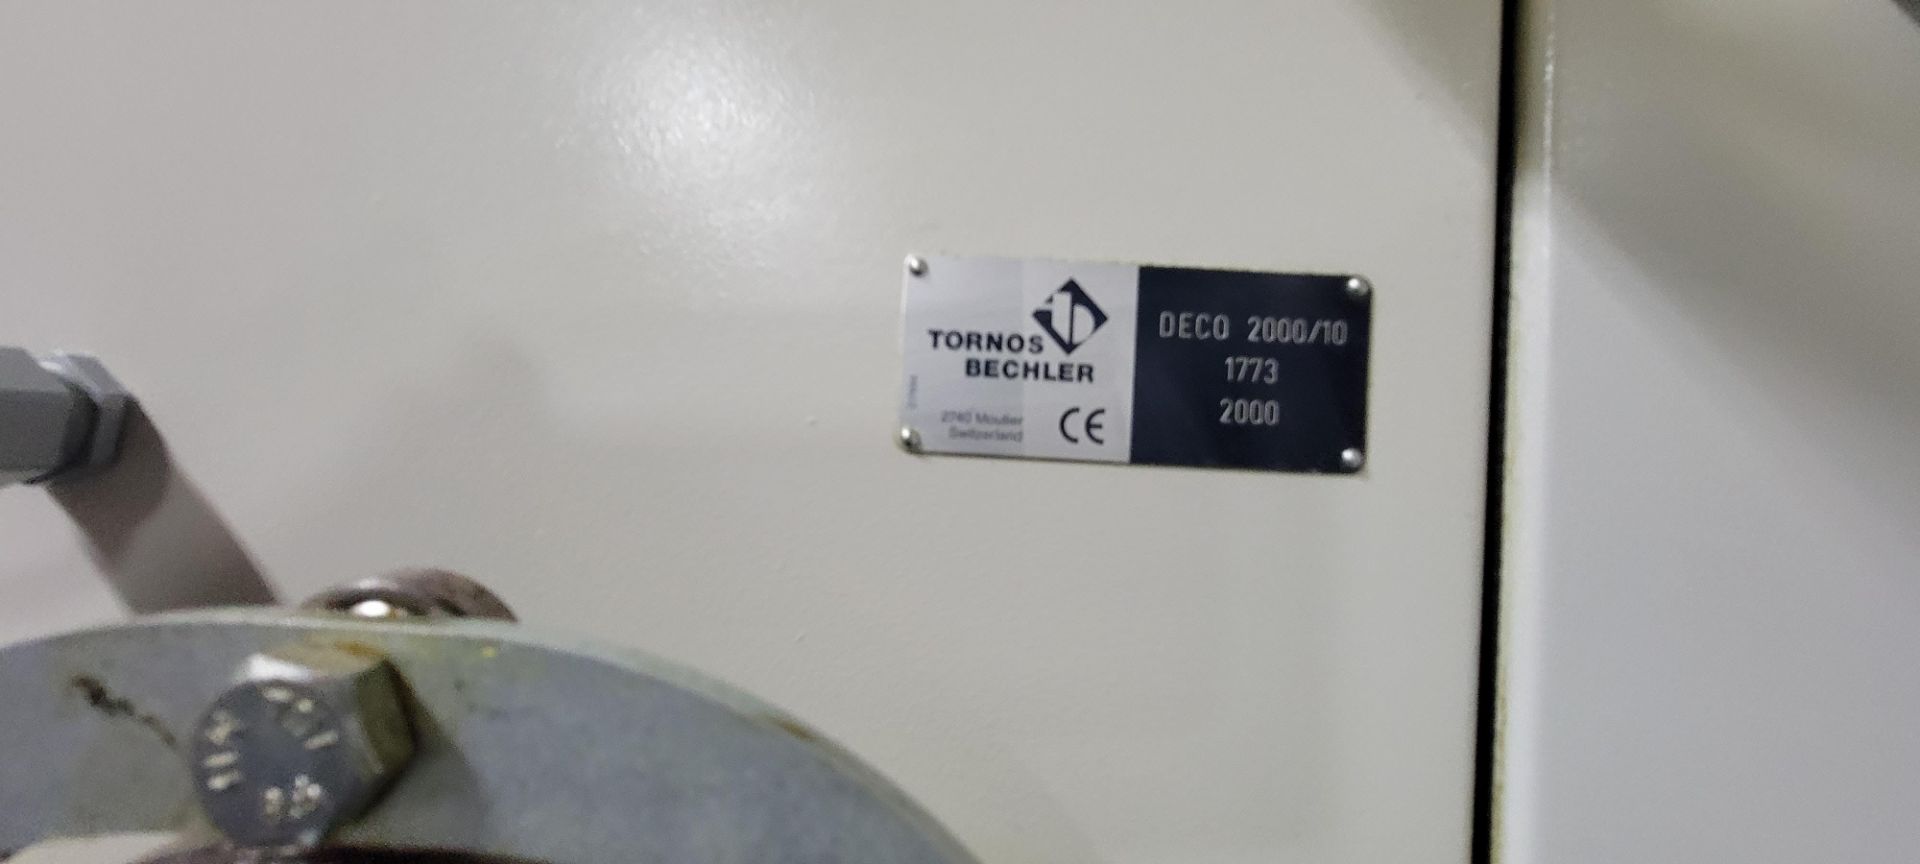 Tornos Bechler Deco 2000/10 9-Axis Sliding Headstock CNC Swiss-Type Screw Machine - Image 15 of 17